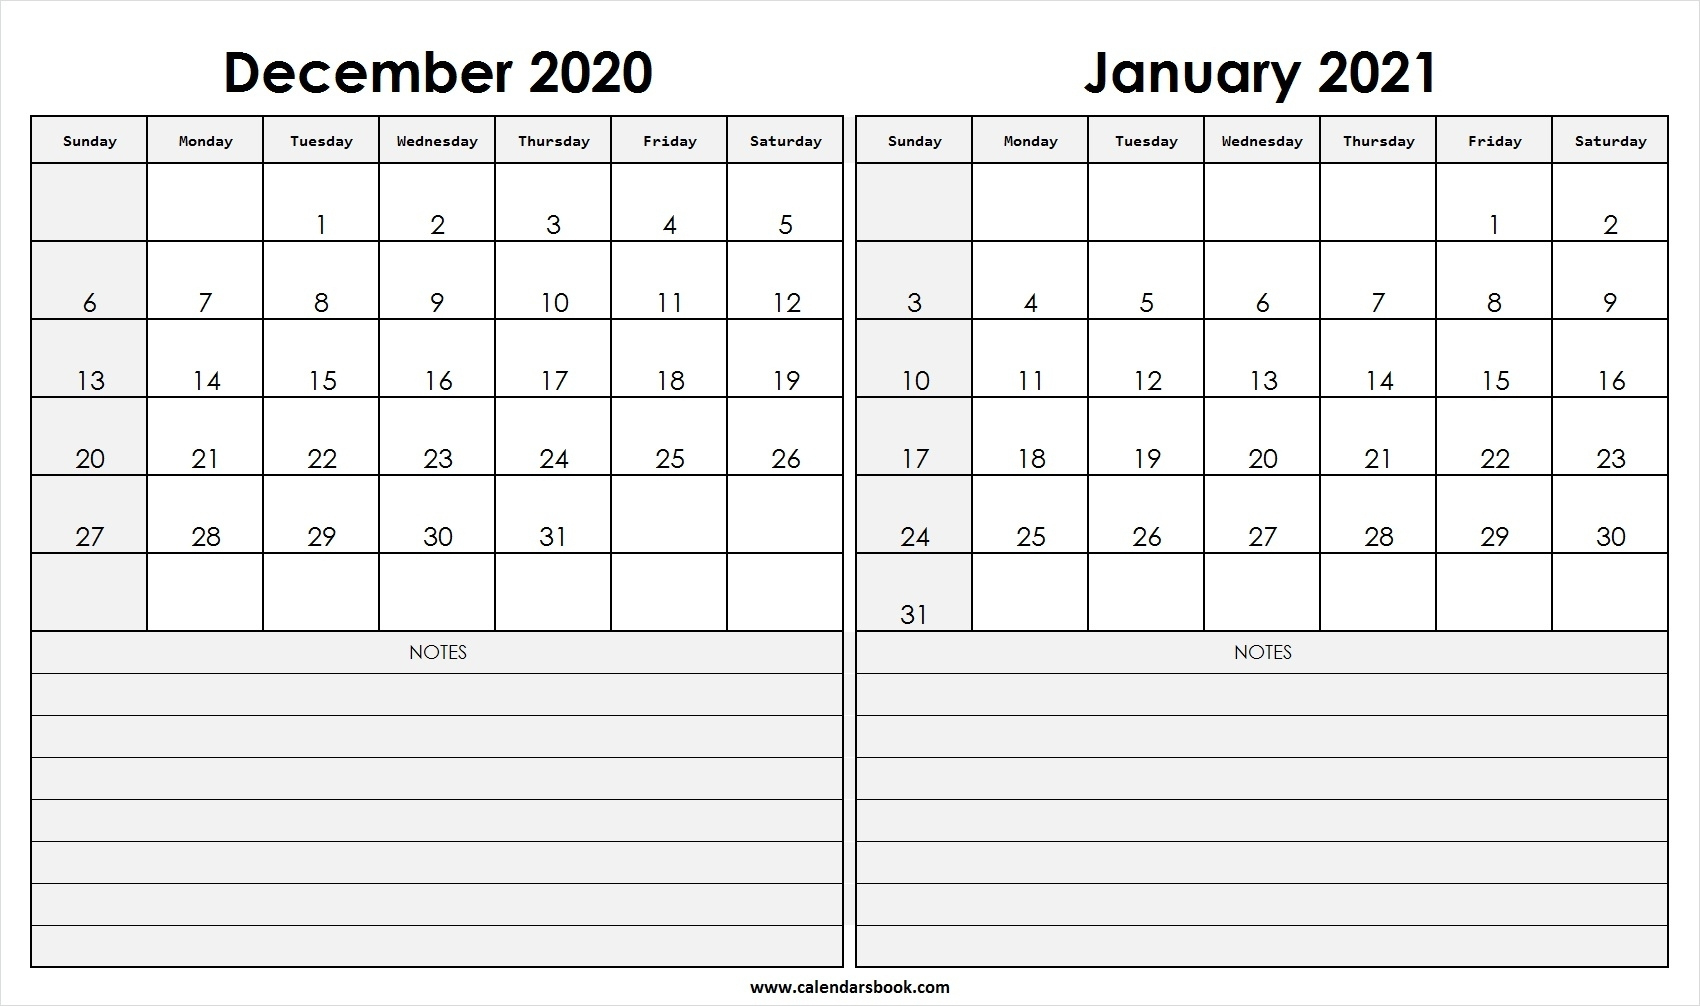 2021 Calendar December January 2020 | Avnitasoni Calendar Of December 2020 And January 2021